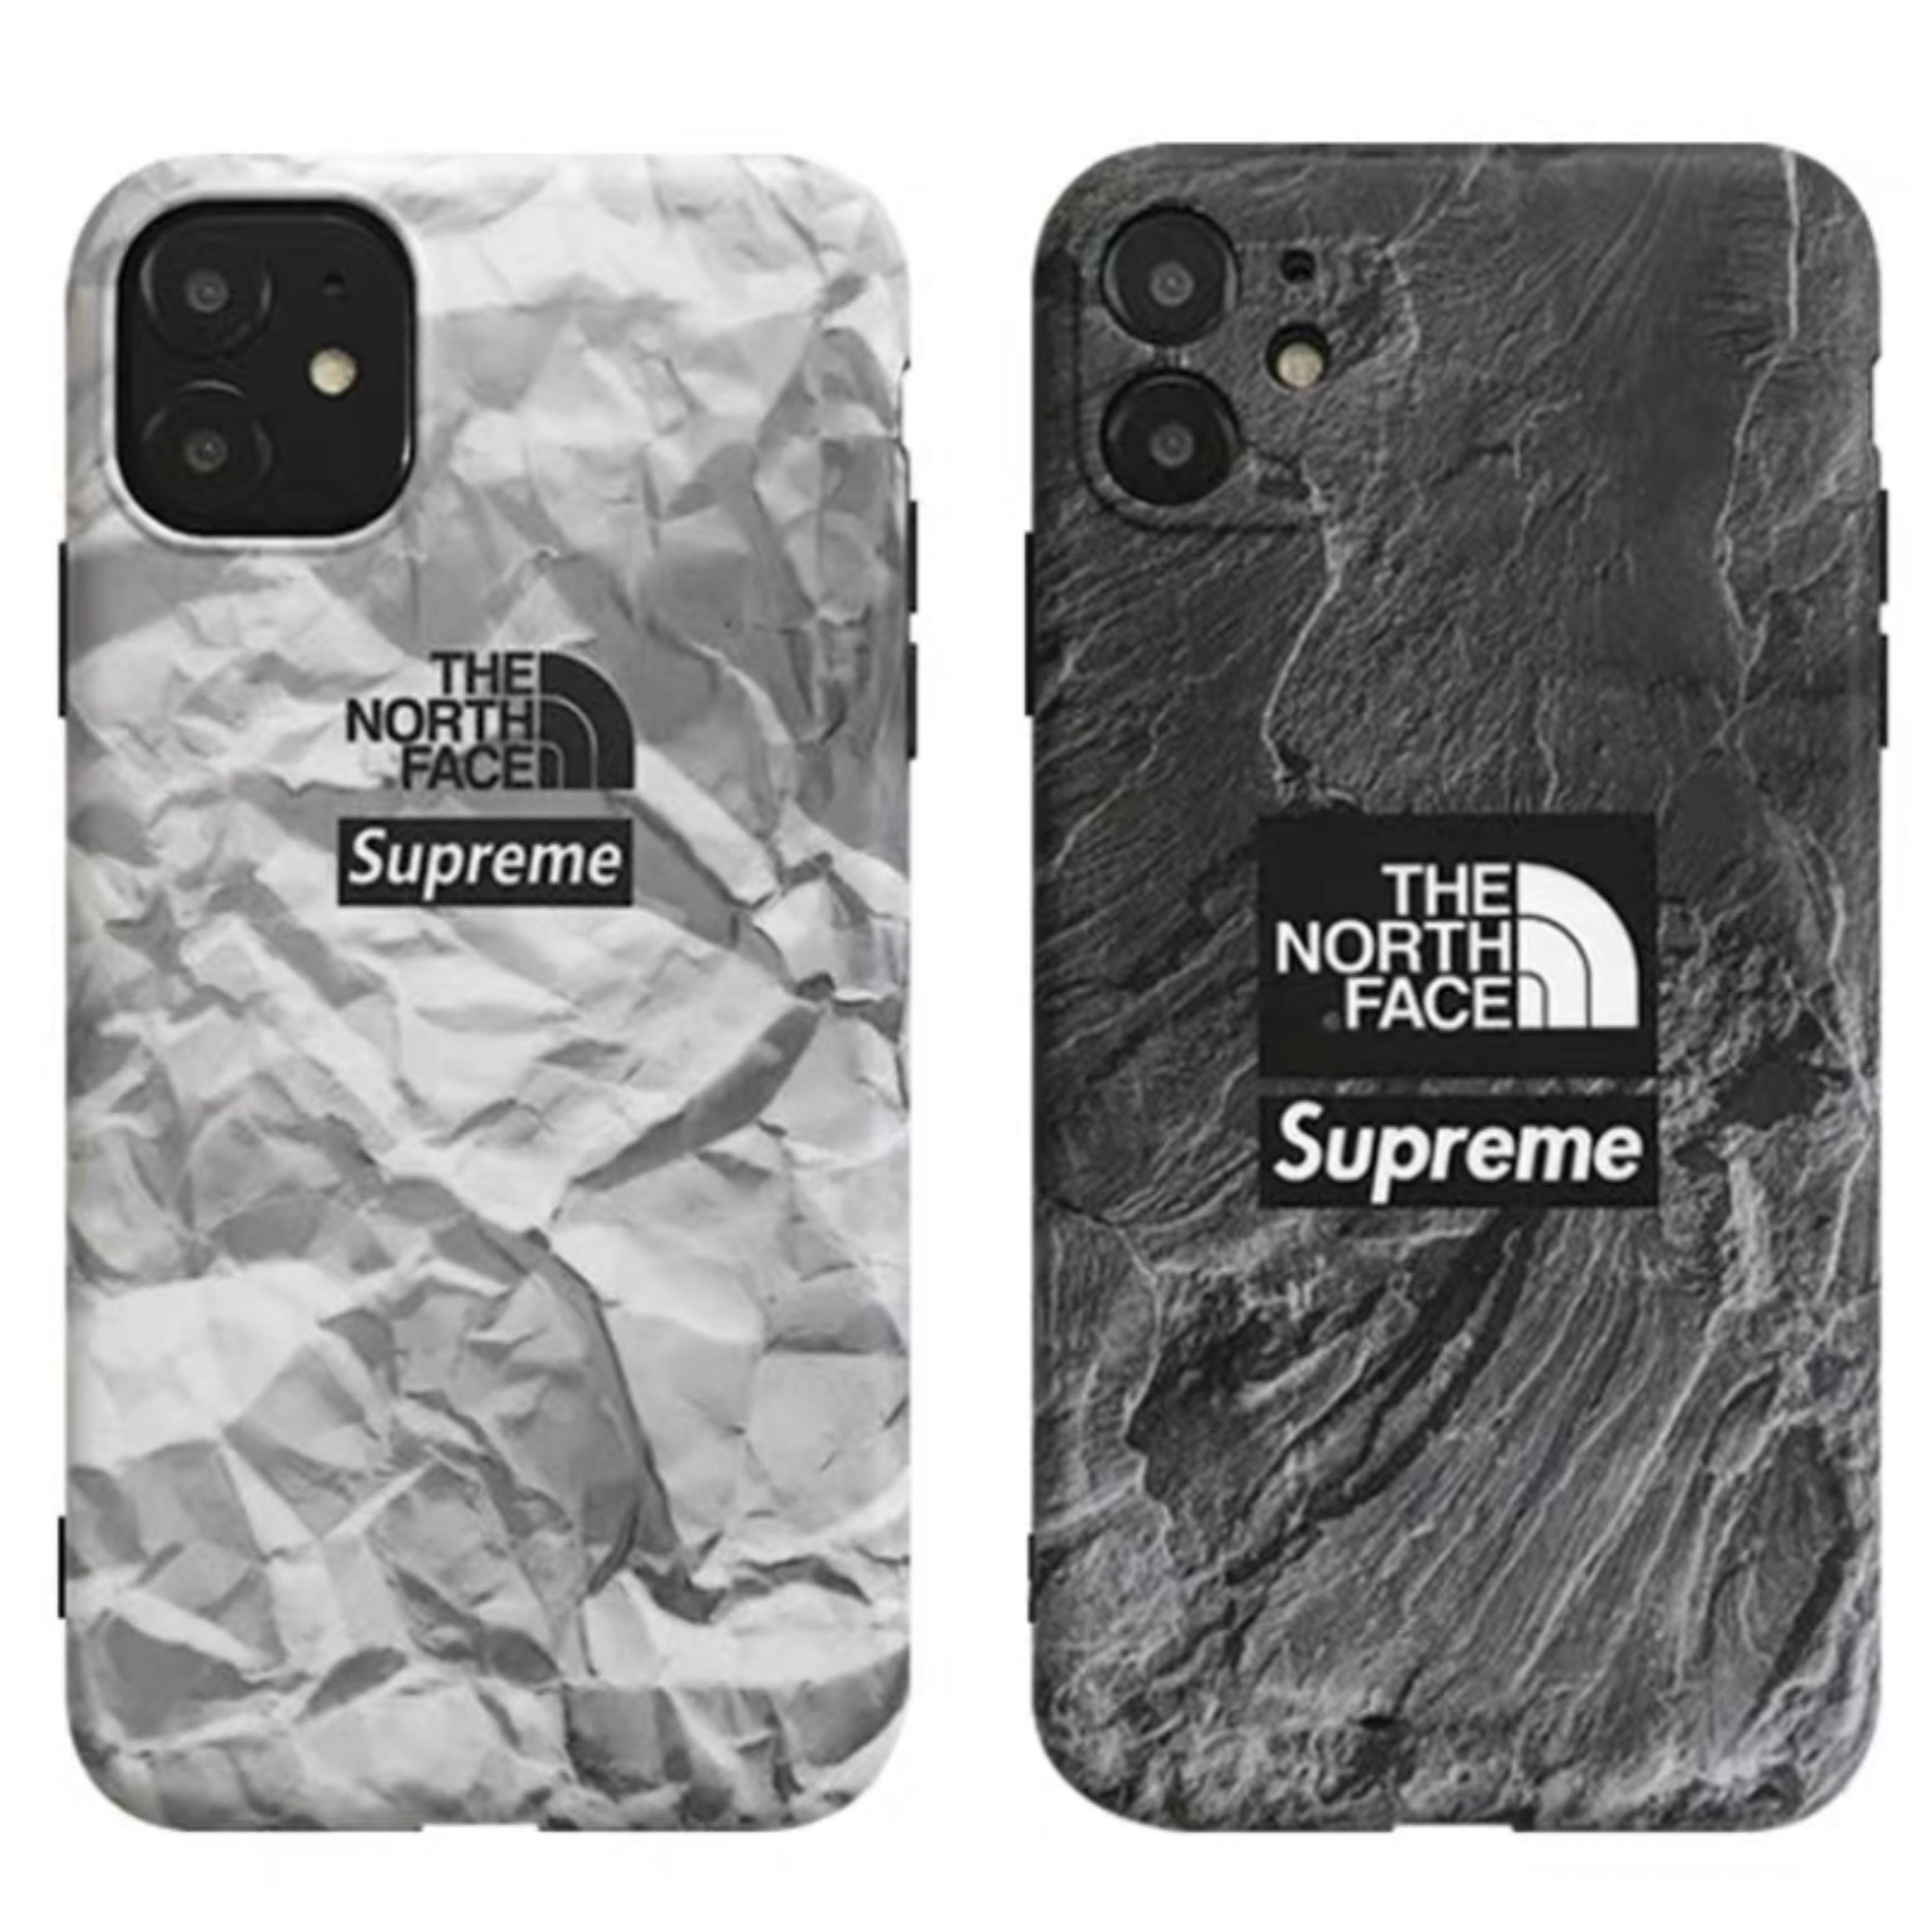 North Face/Supreme iPhone Case, Mobile 